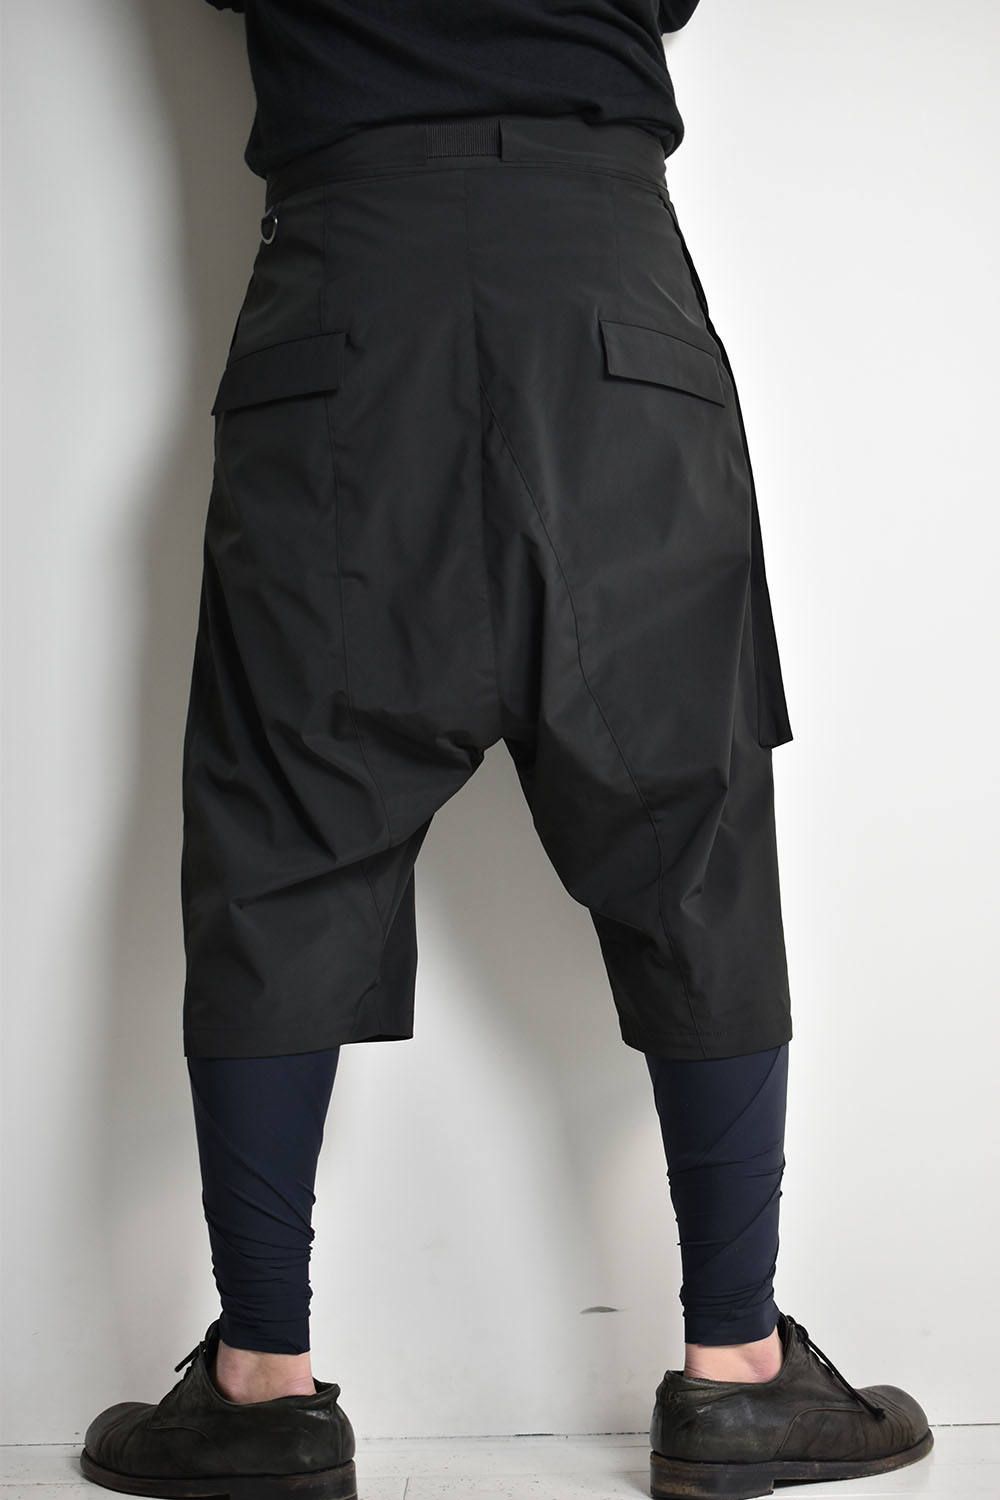 Olmetex 7length Pants"Black" / オルメテックス7分丈パンツ"ブラック"